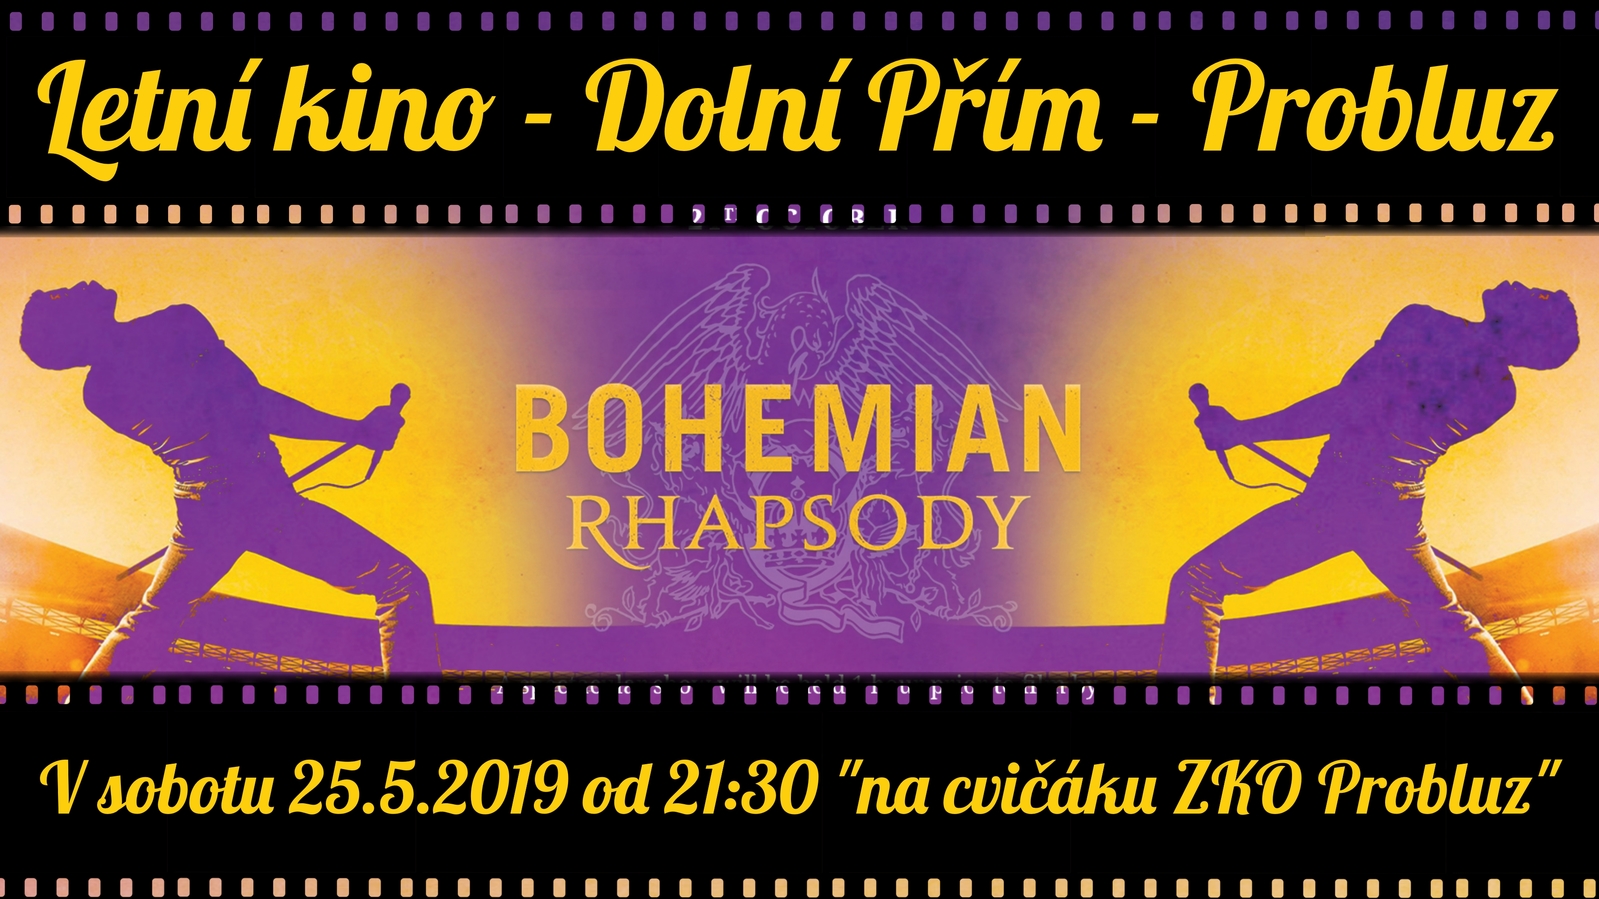 Dolní Přím - Probluz ZKO - Bohemian Rhapsody - ZPRAVODAJ - FB (ver. 2).jpg